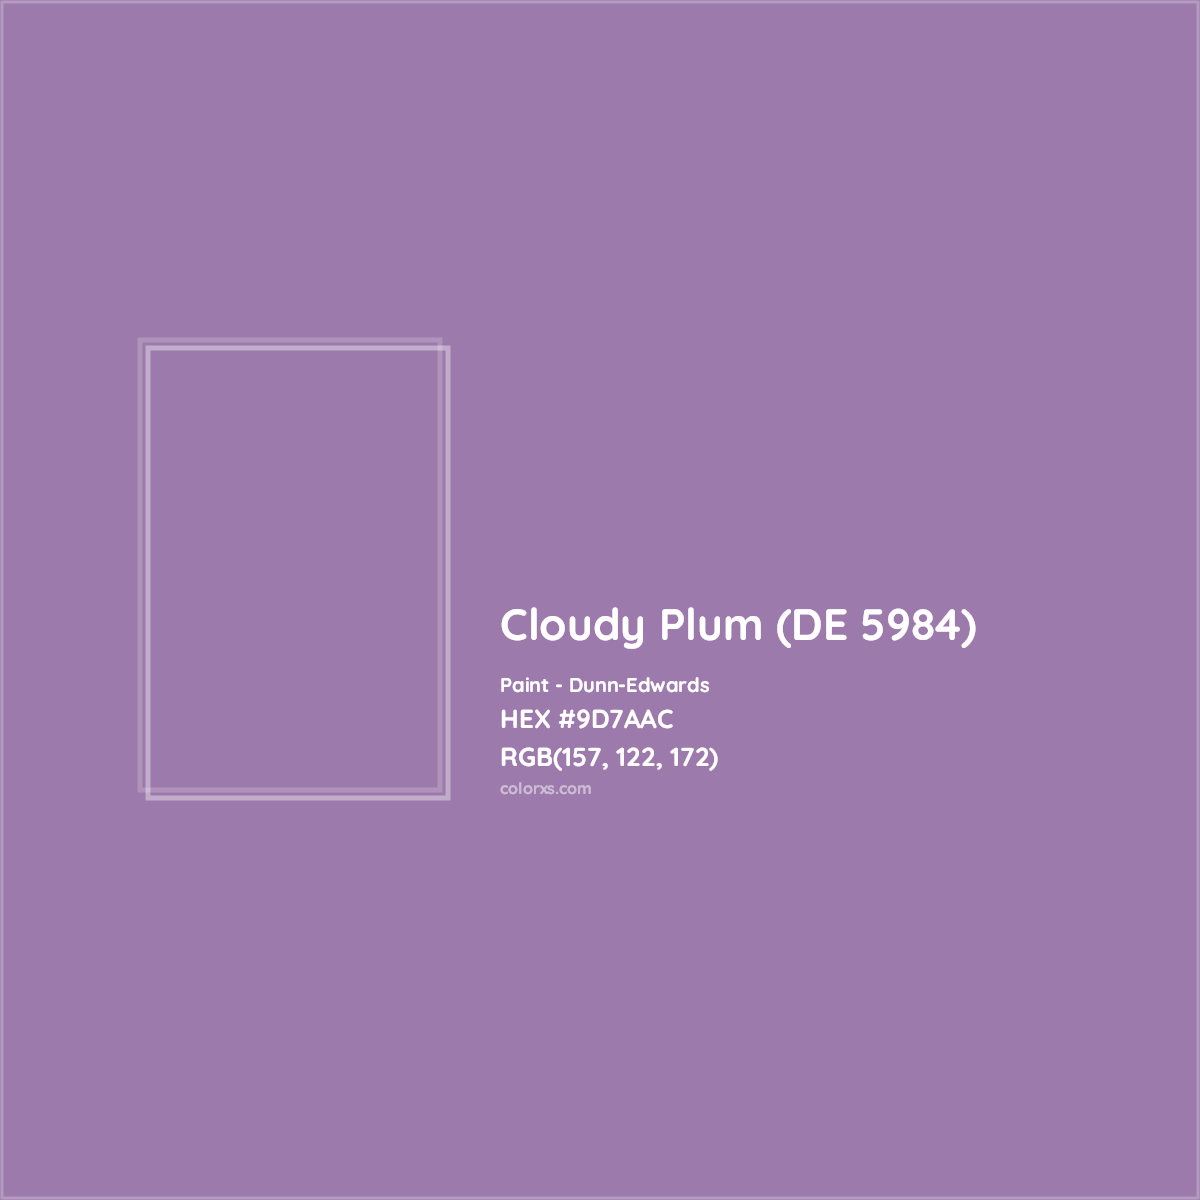 HEX #9D7AAC Cloudy Plum (DE 5984) Paint Dunn-Edwards - Color Code